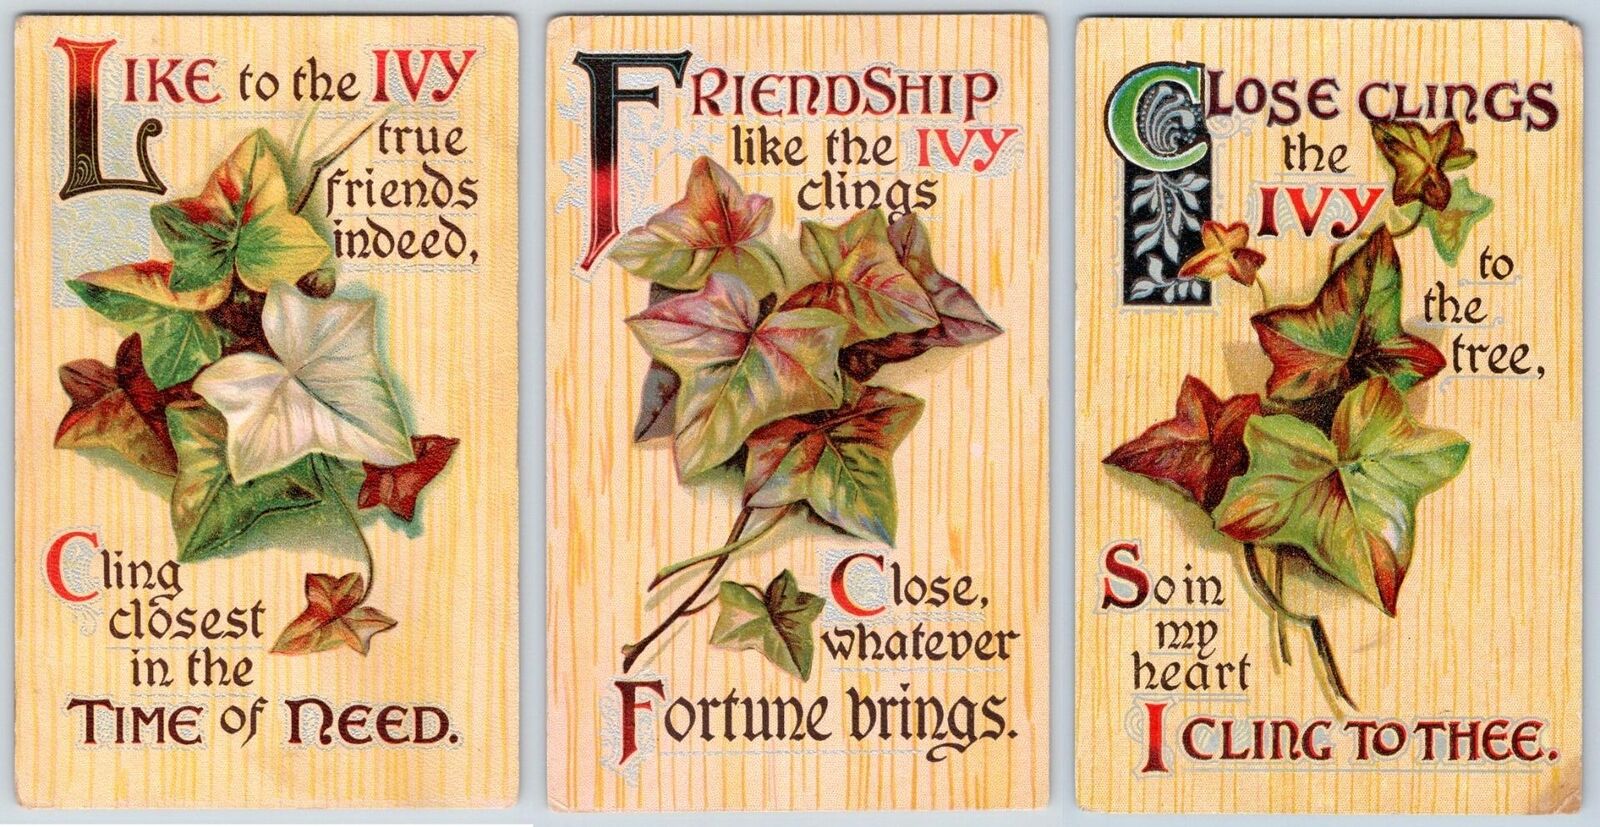 SET/3 IVY CLINGS FRIENDSHIP ANTIQUE POSTCARDS*1909-1910*CONDITION VARIES